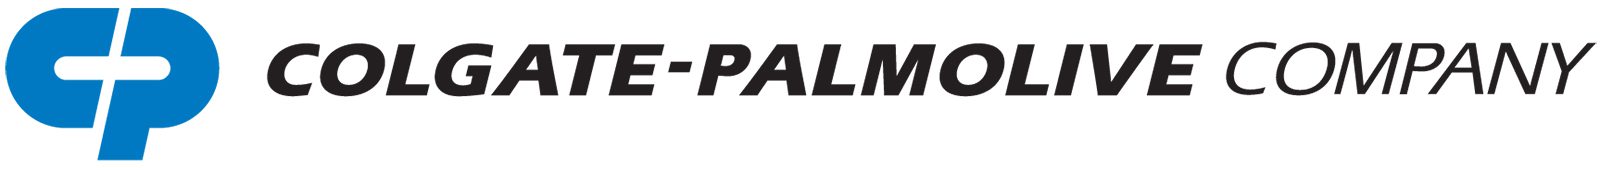 Colgate-Pamolive Co. logo